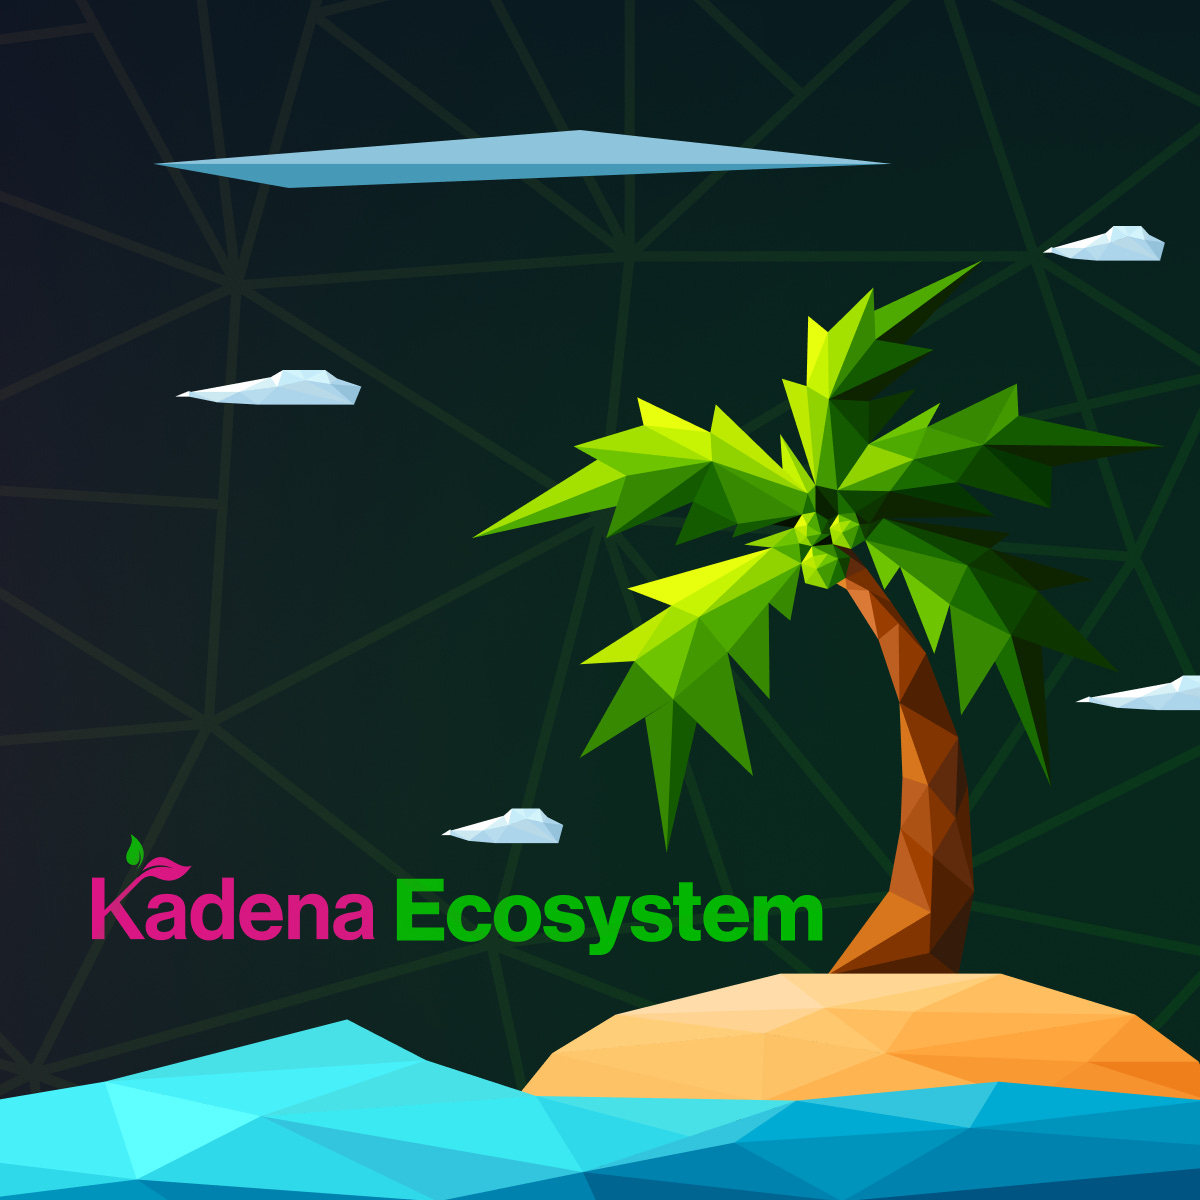 Kadena Ecosystem Weekly Newsletter